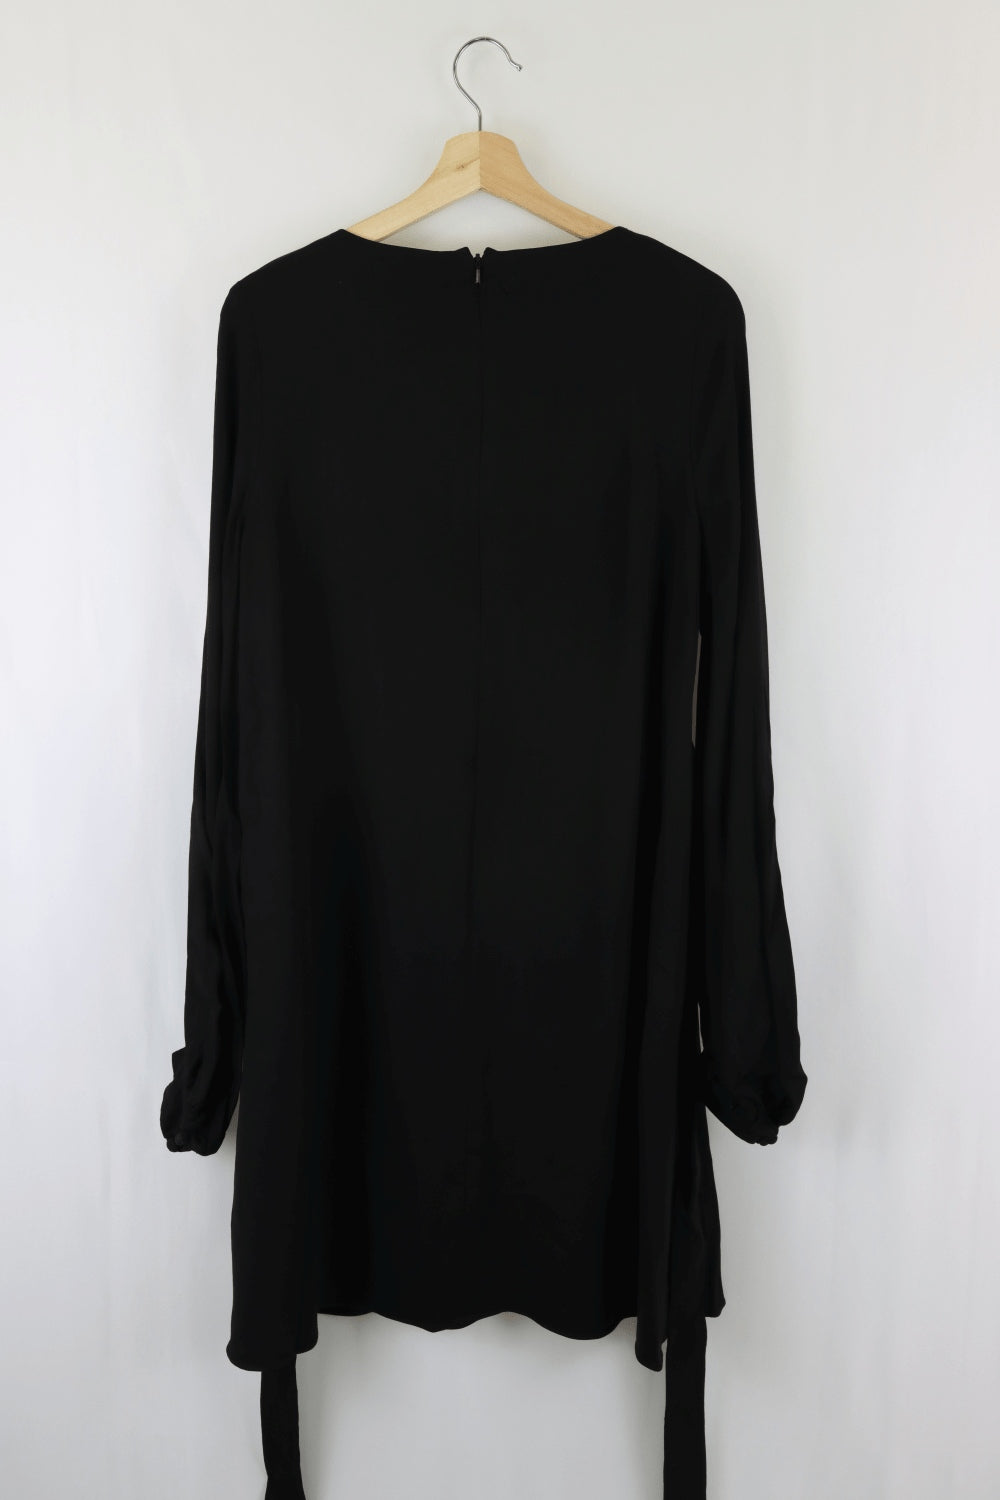 Scanlan Theodore Black Dress 10